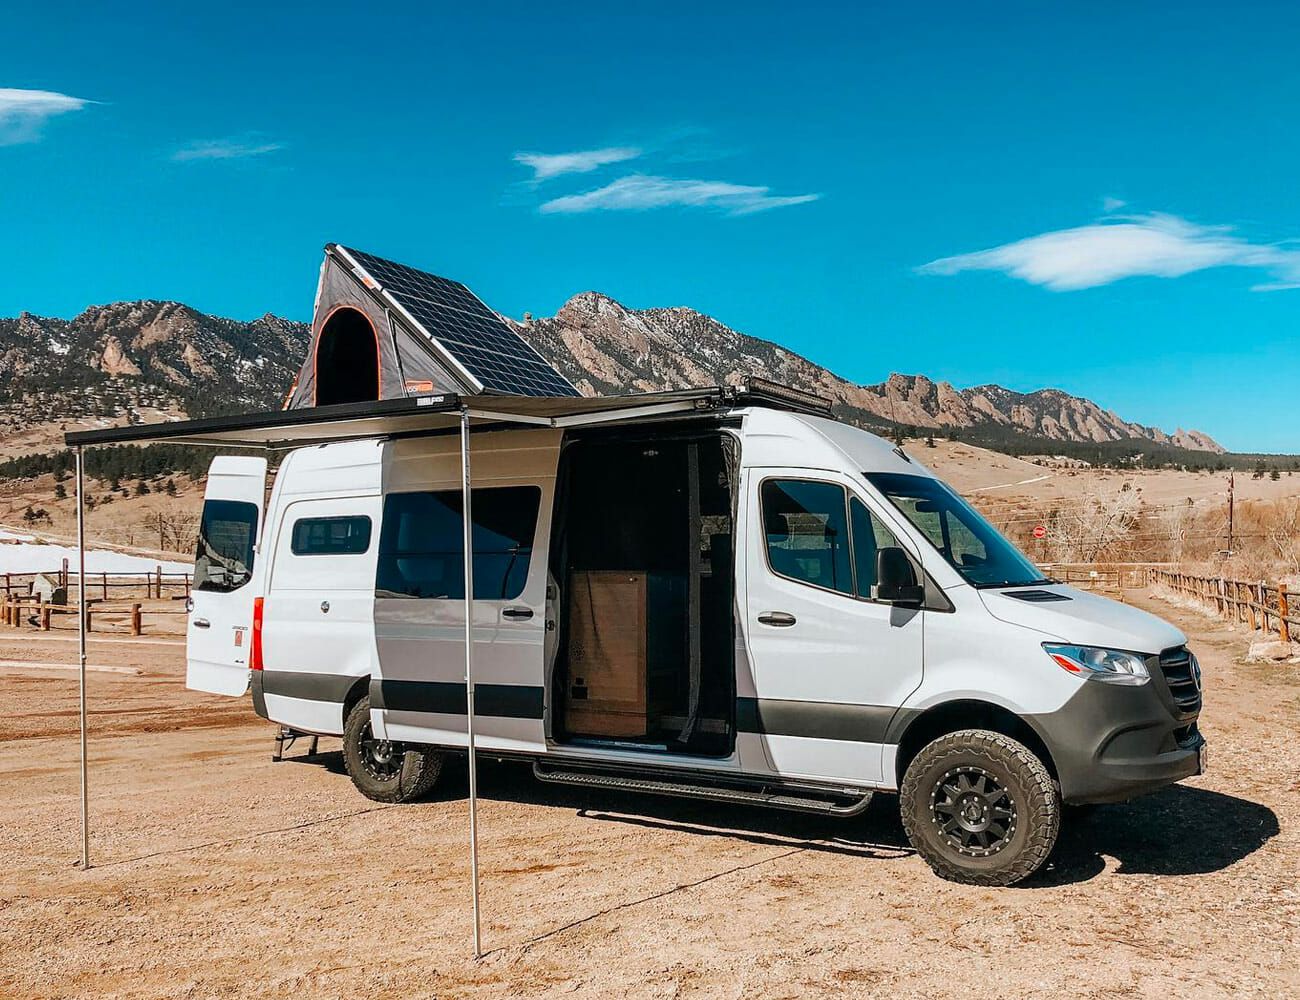 vans and campers